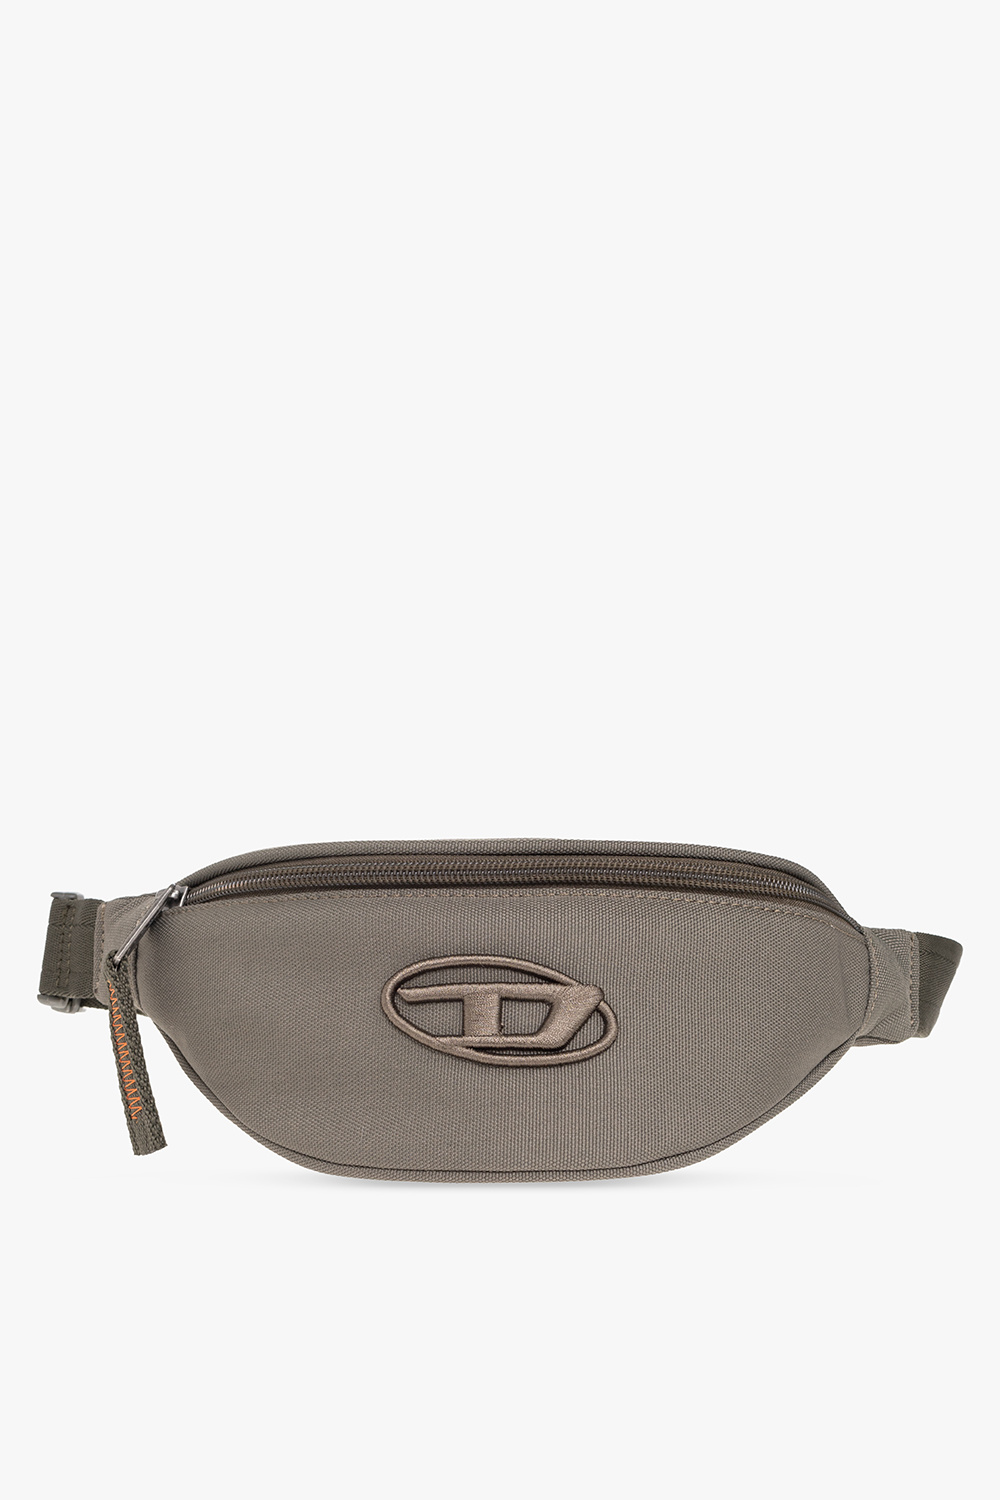 Diesel ‘D. 90’ belt bag